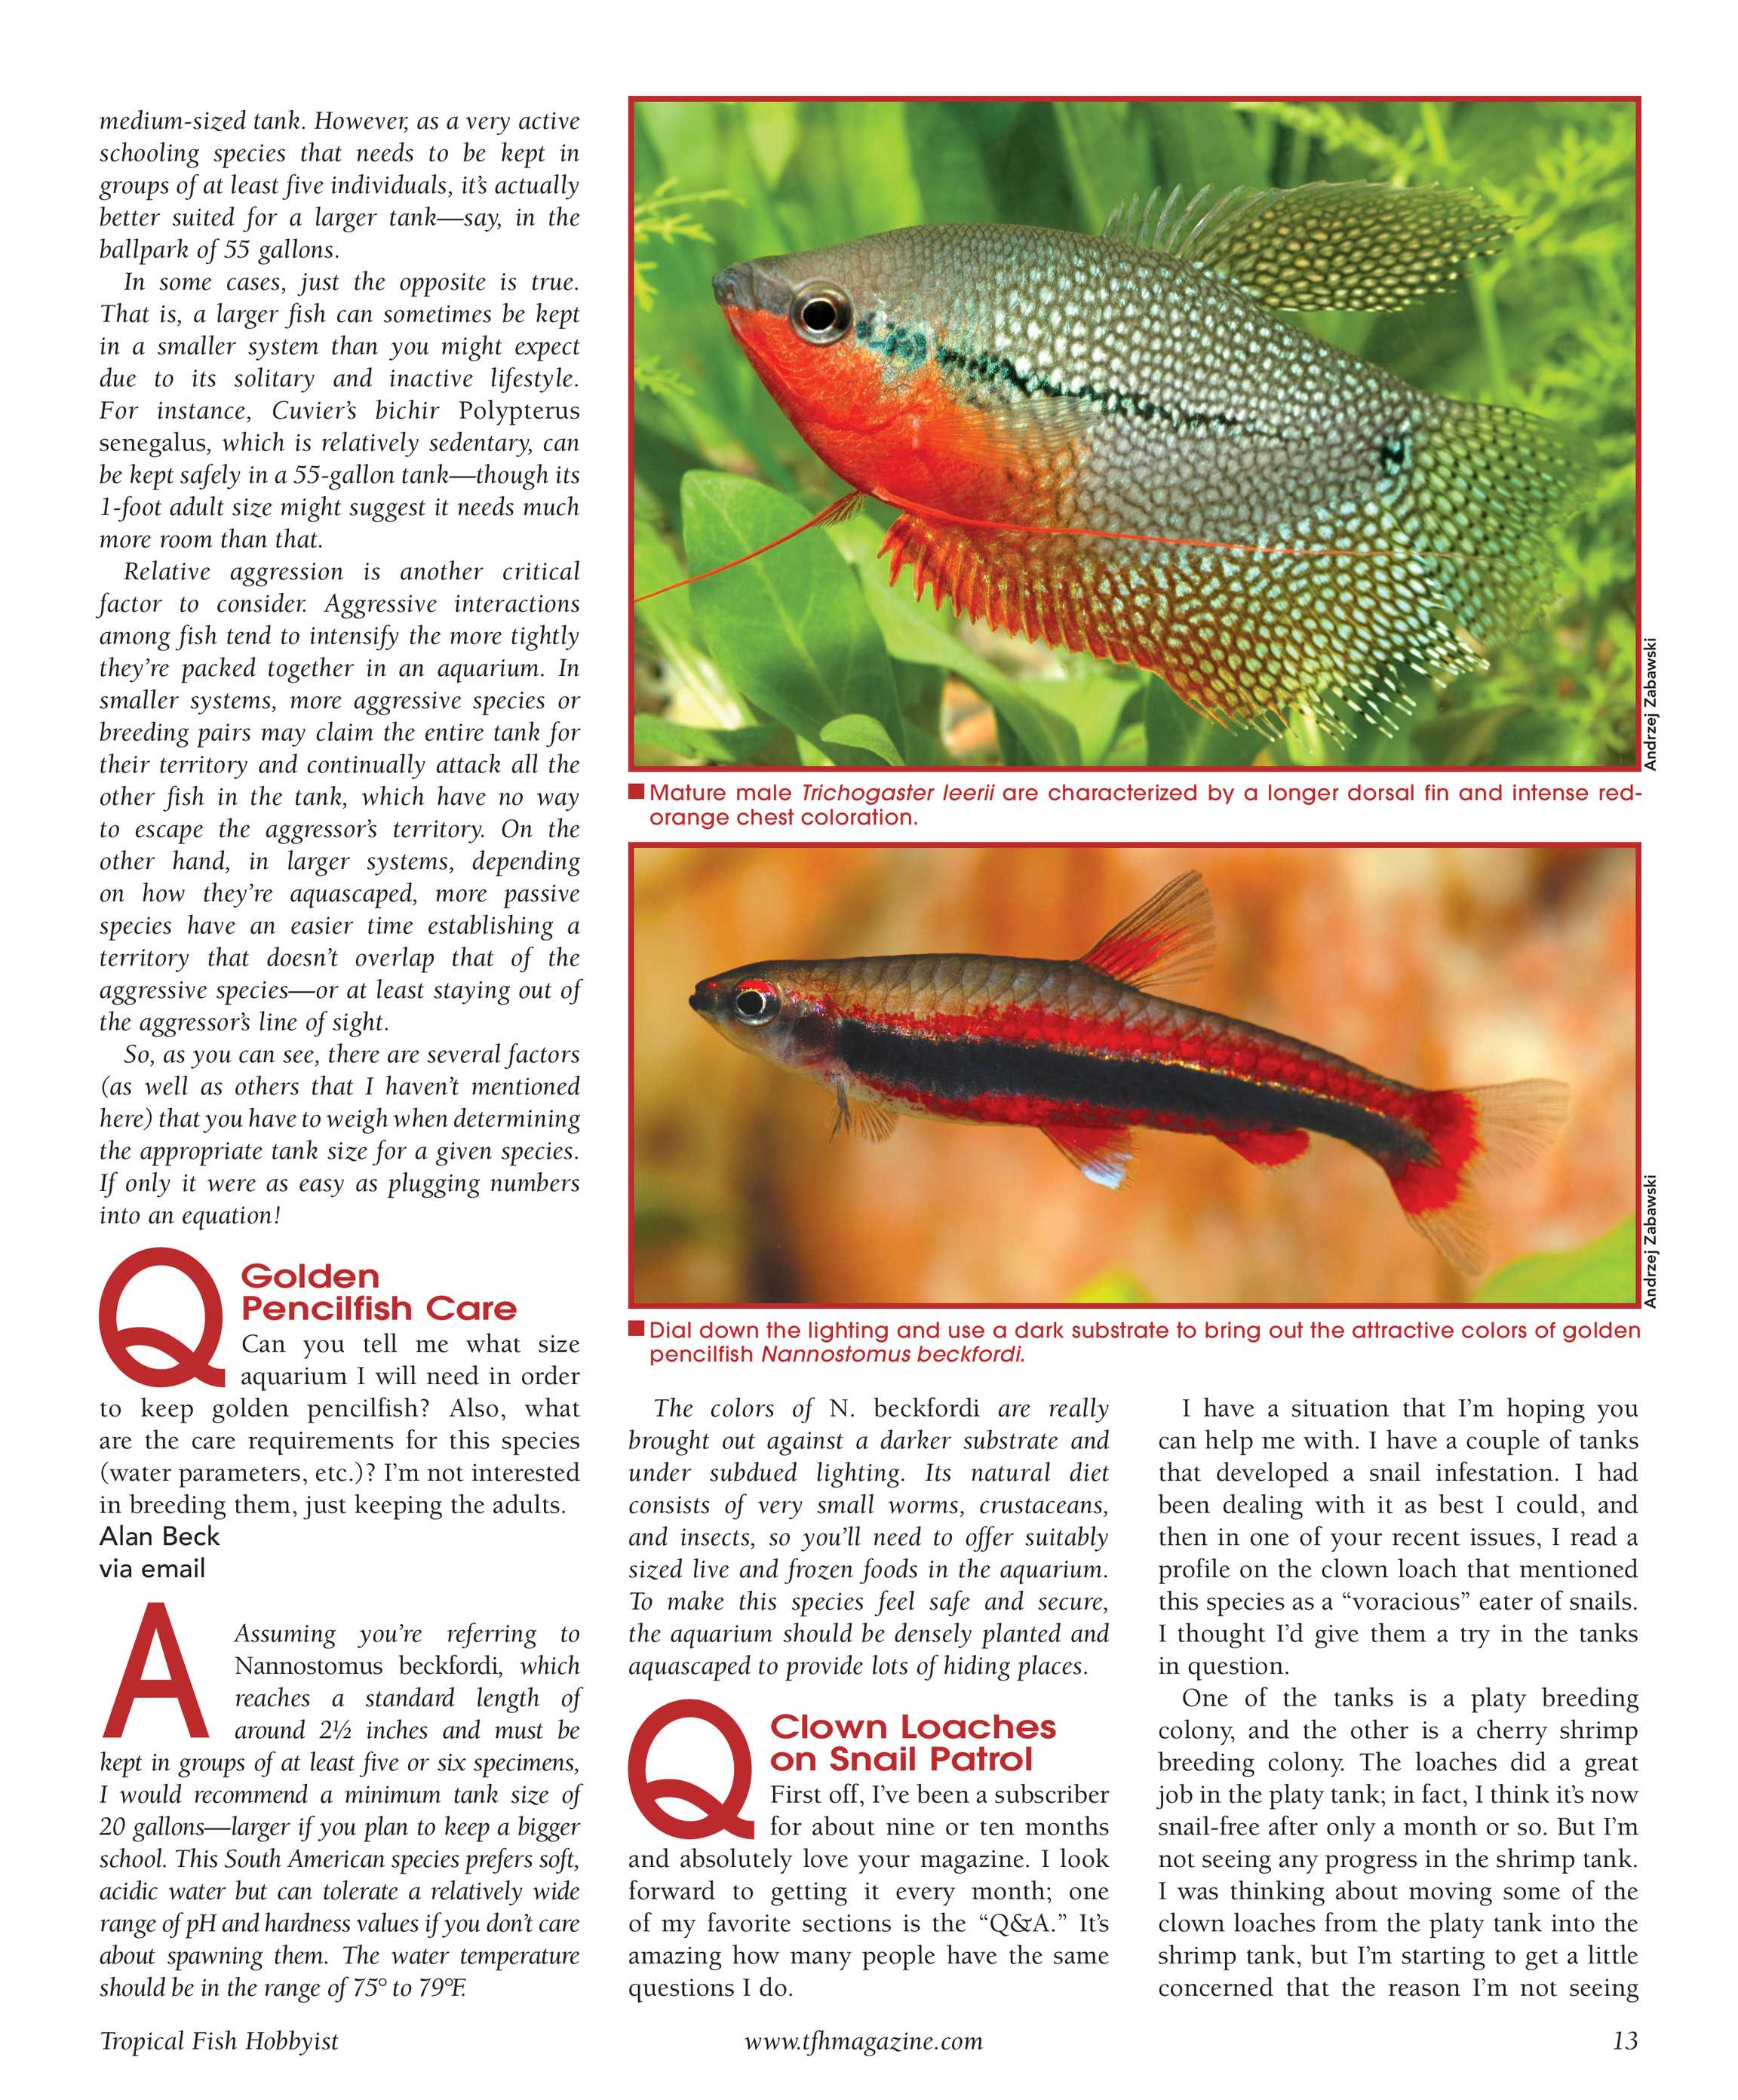 New fish keeper questions.